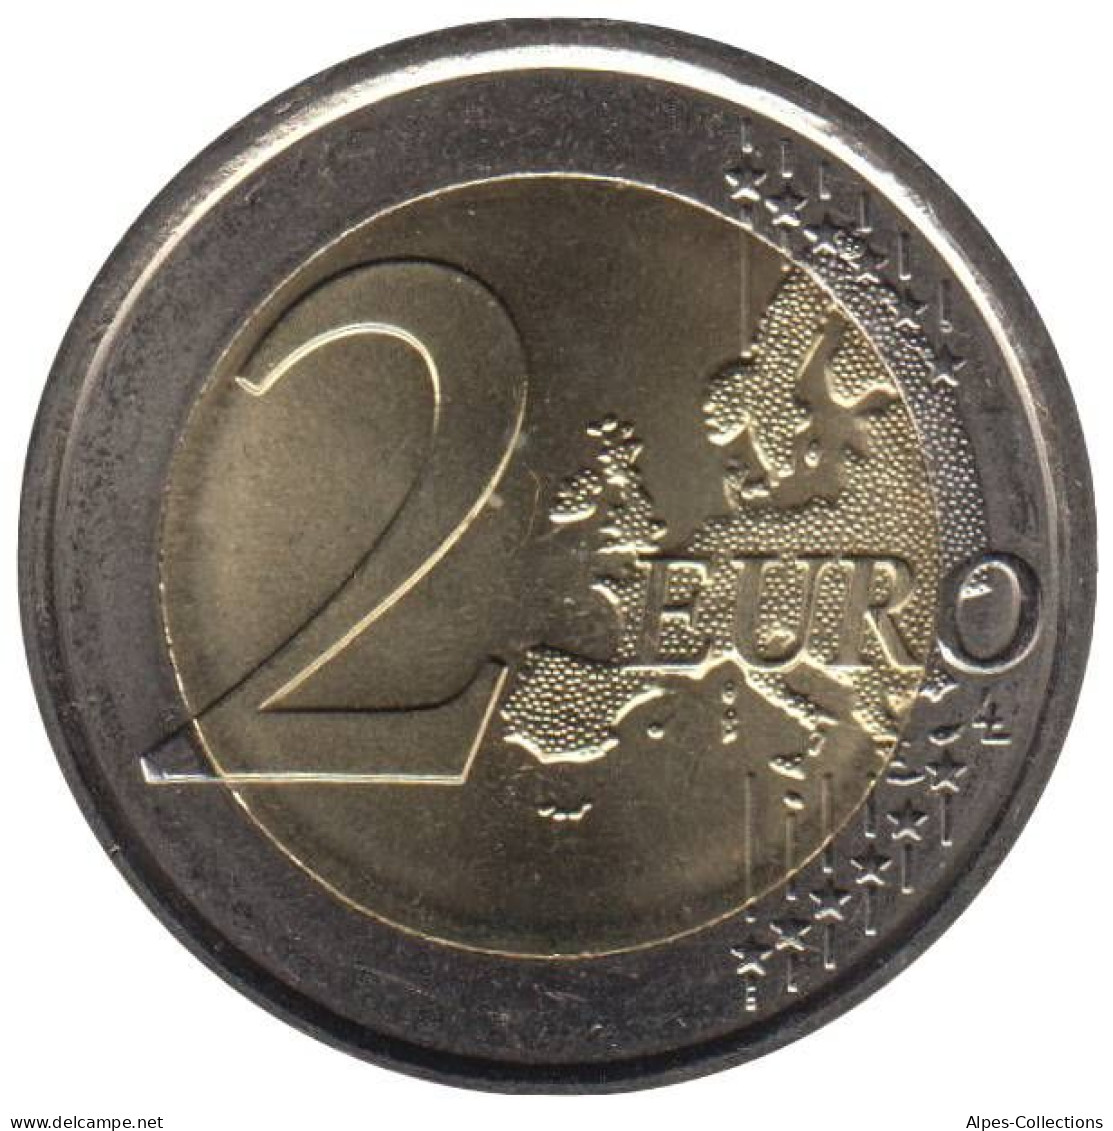 SA20013.3 - SAINT MARIN - 2 Euros - 2013 - San Marino